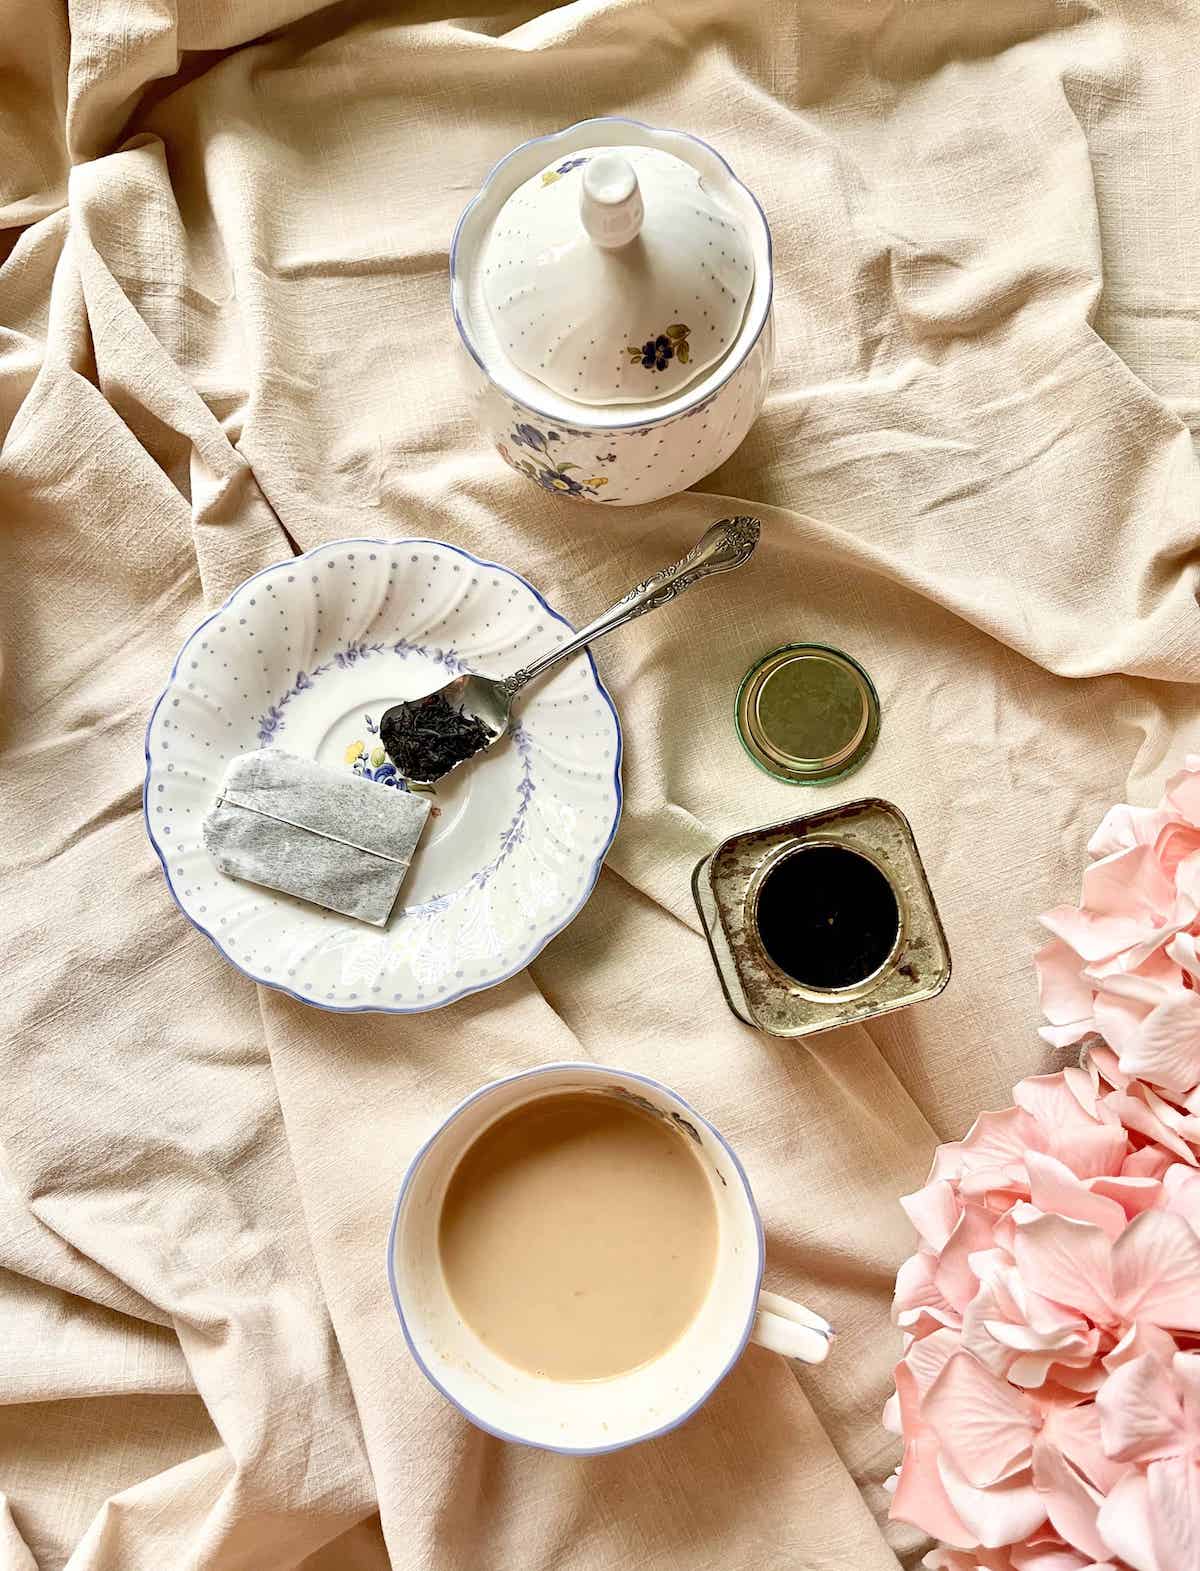 Japanese milk tea as part of an afternoon tea set.